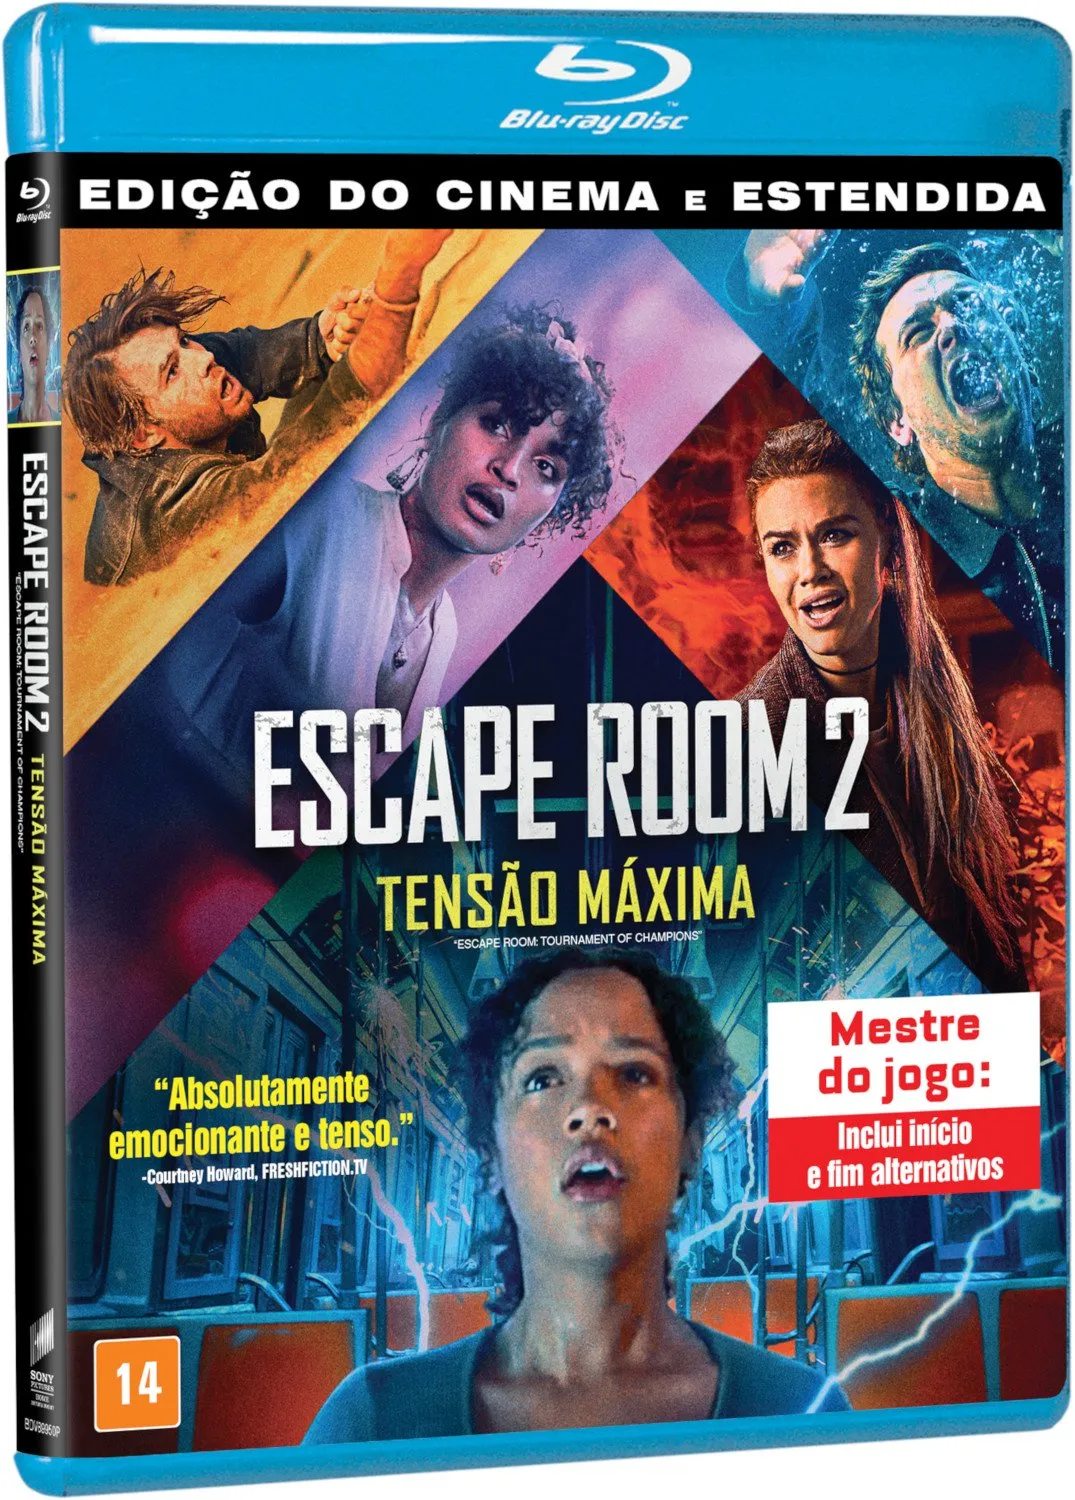 ESCAPE ROOM 2: TENSÃO MÁXIMA - Blu-ray